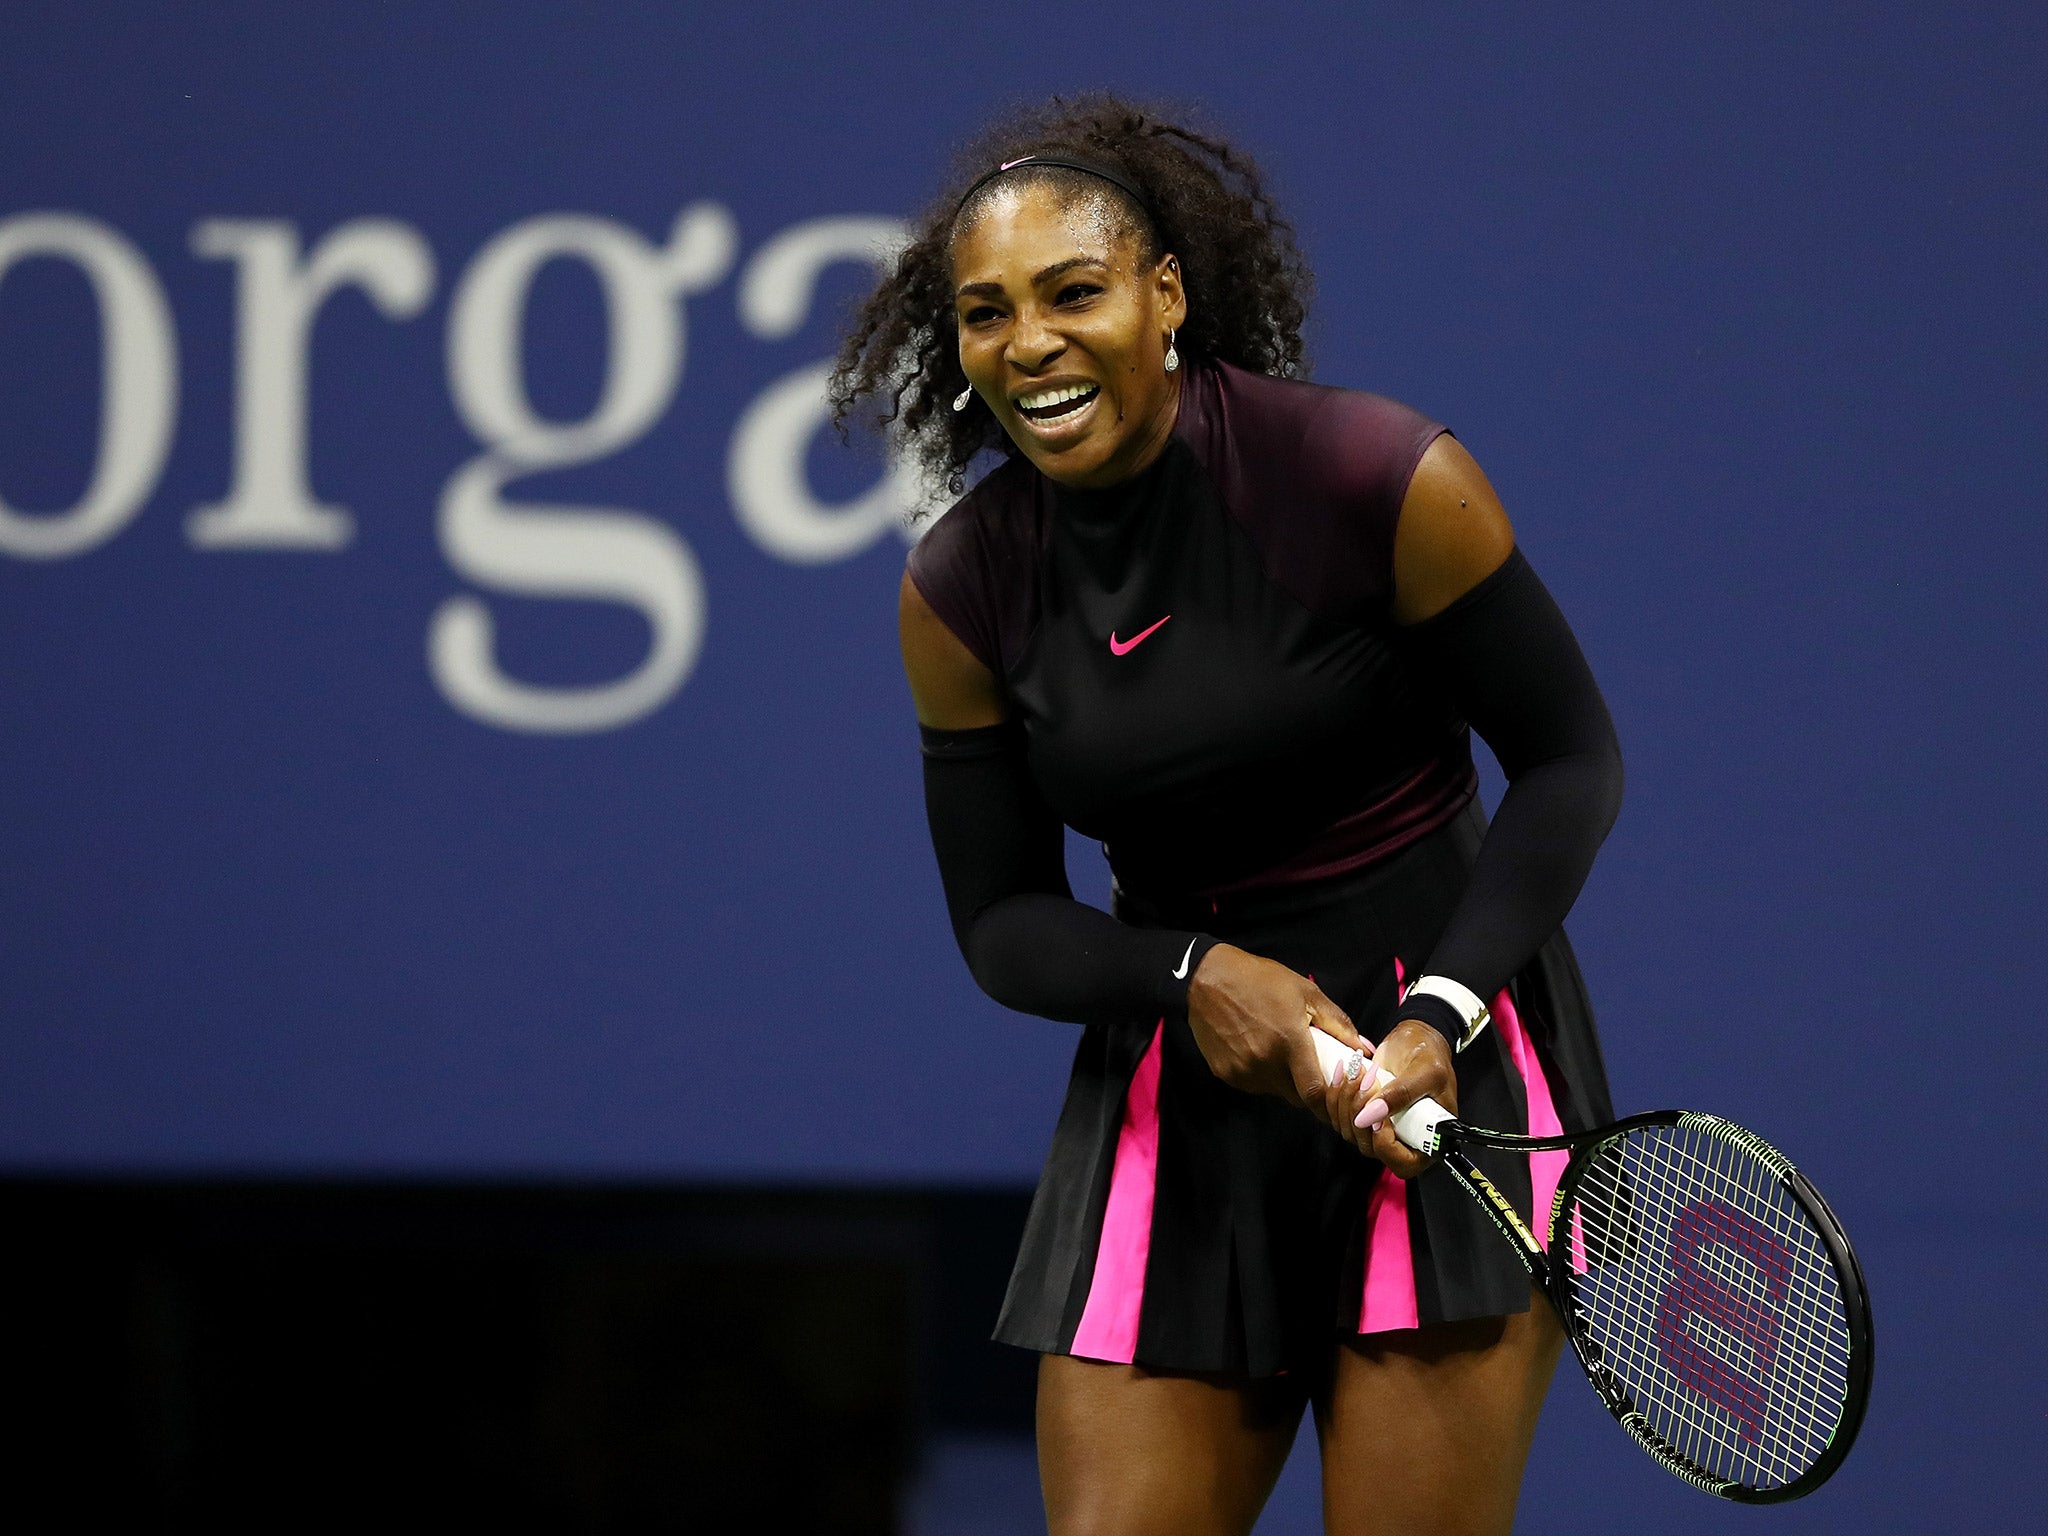 Serena Williams beat Vania King 6-3,6-3 to progress to the third round of the US Open